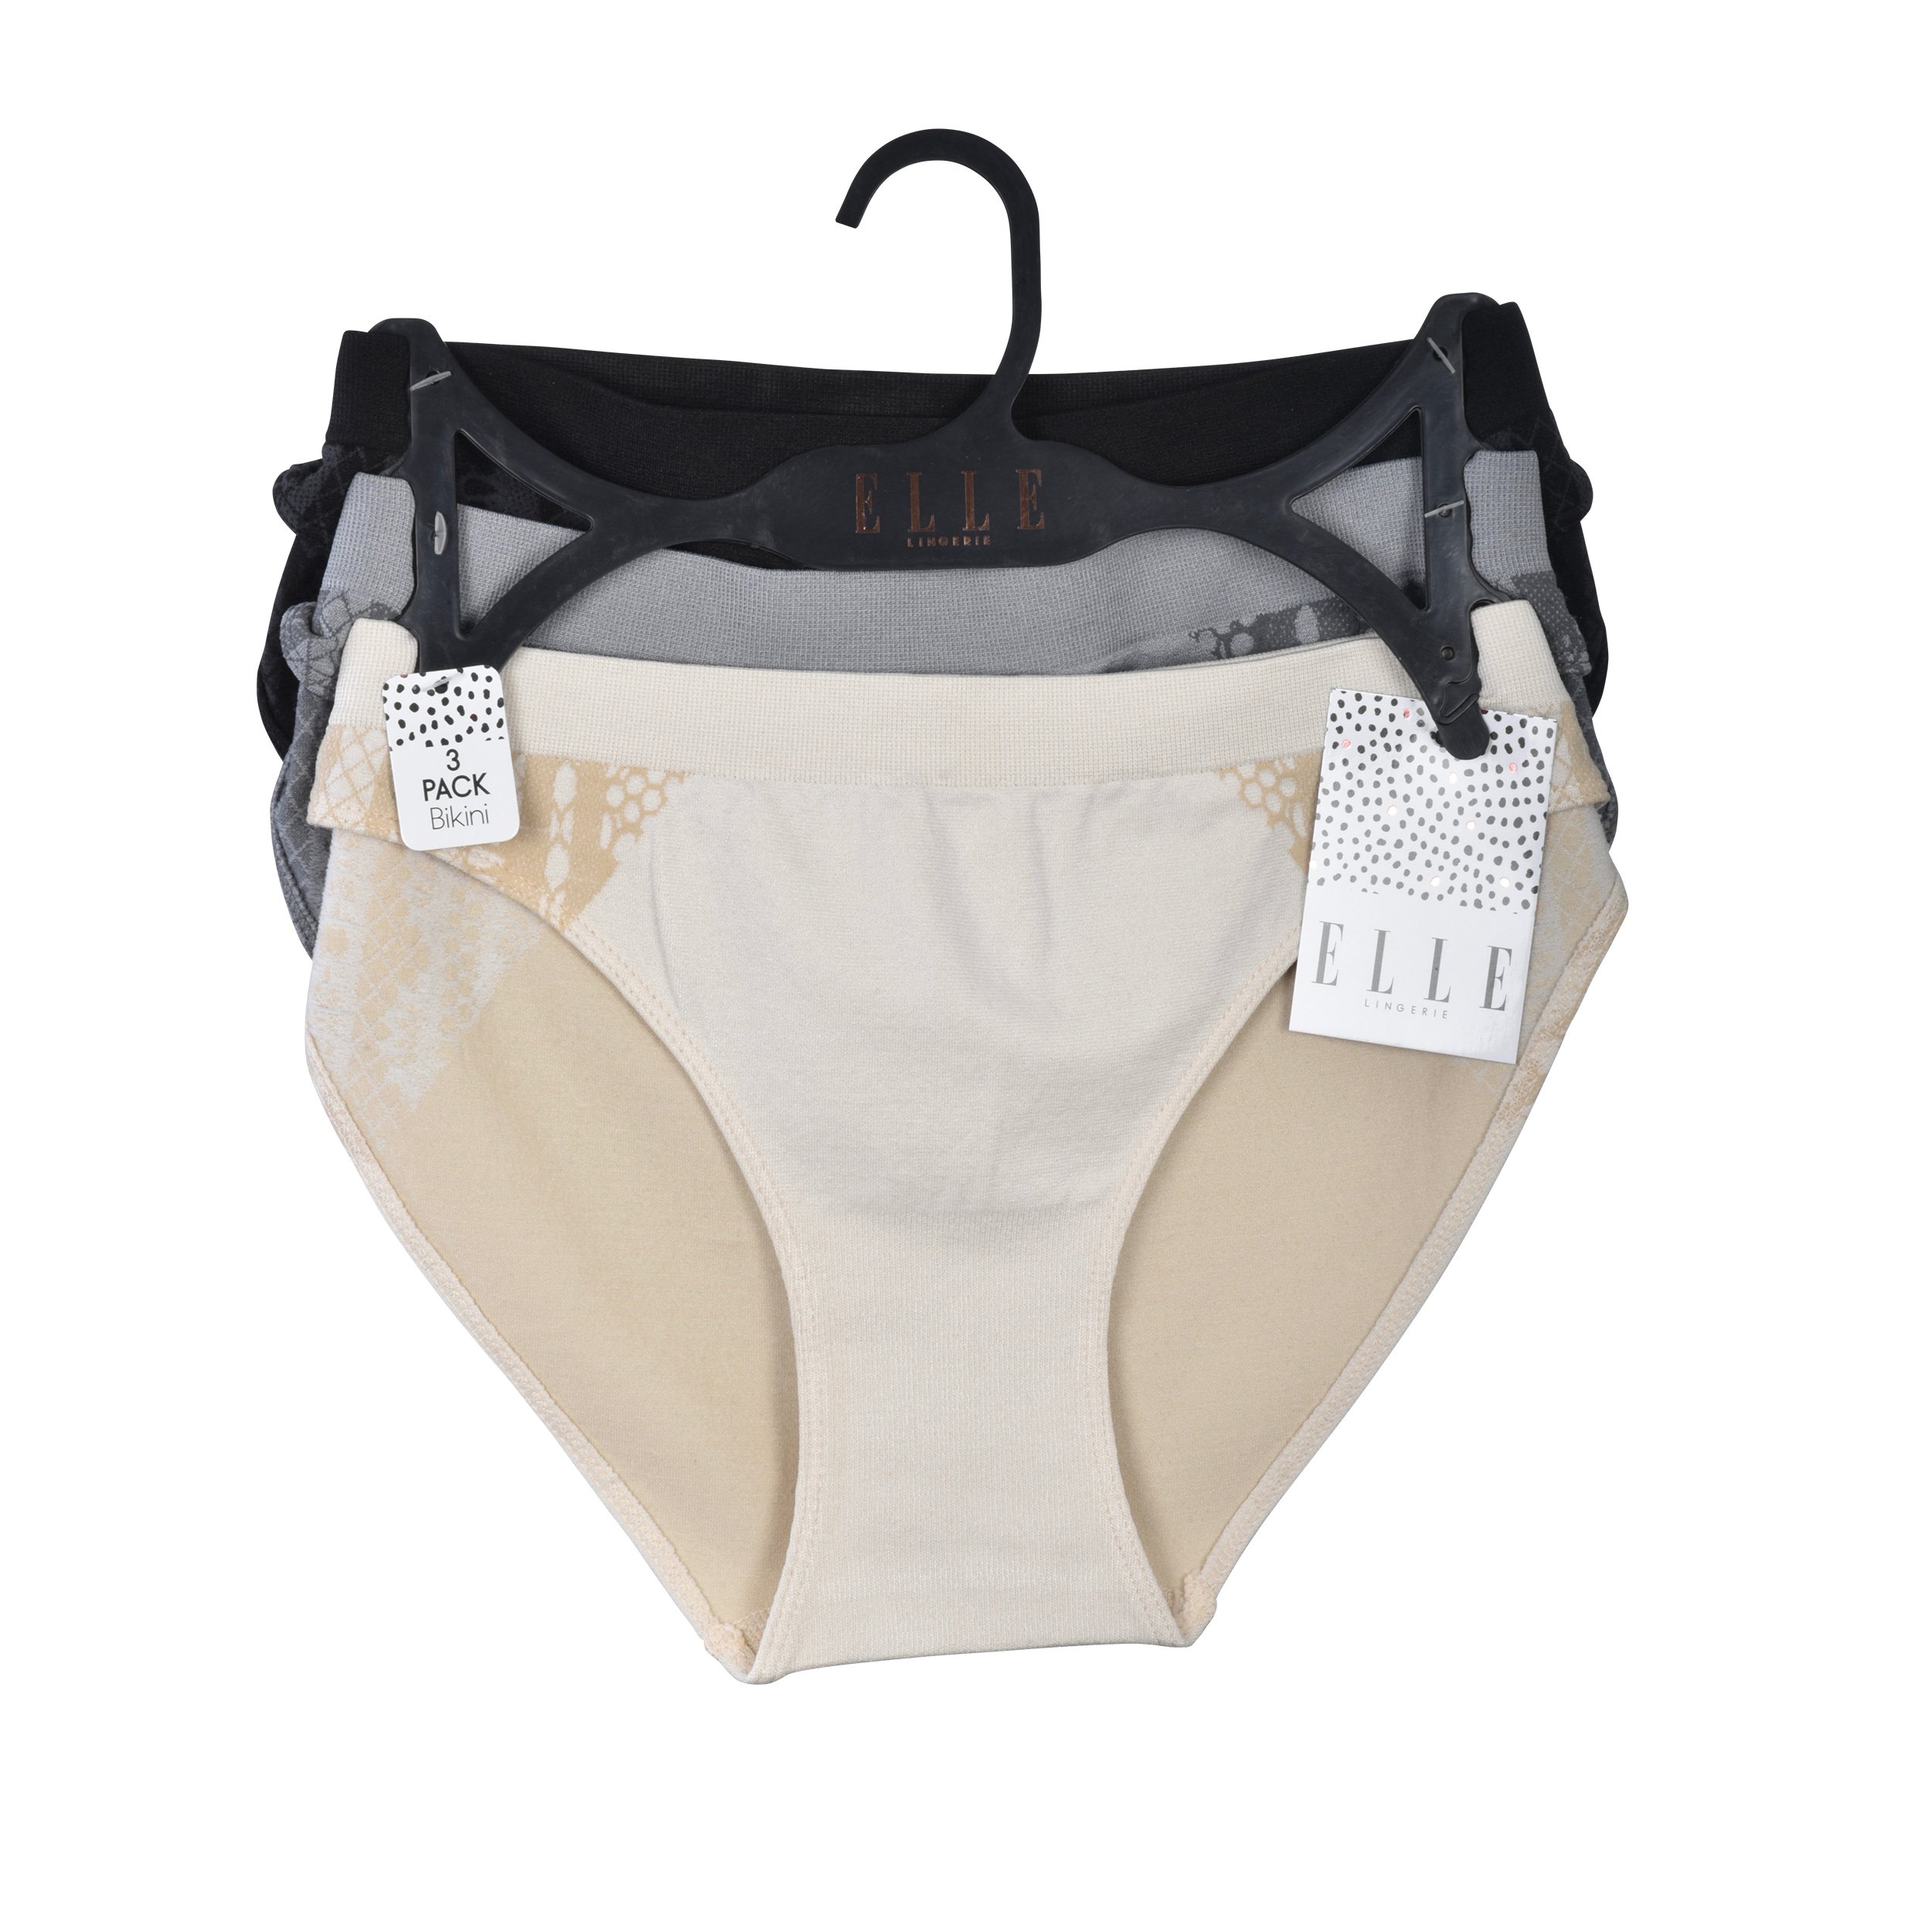 ELLE Women's Seamless Bikinis Underwear Jacquard 3-Pack Polyester/Nylon/Spandex